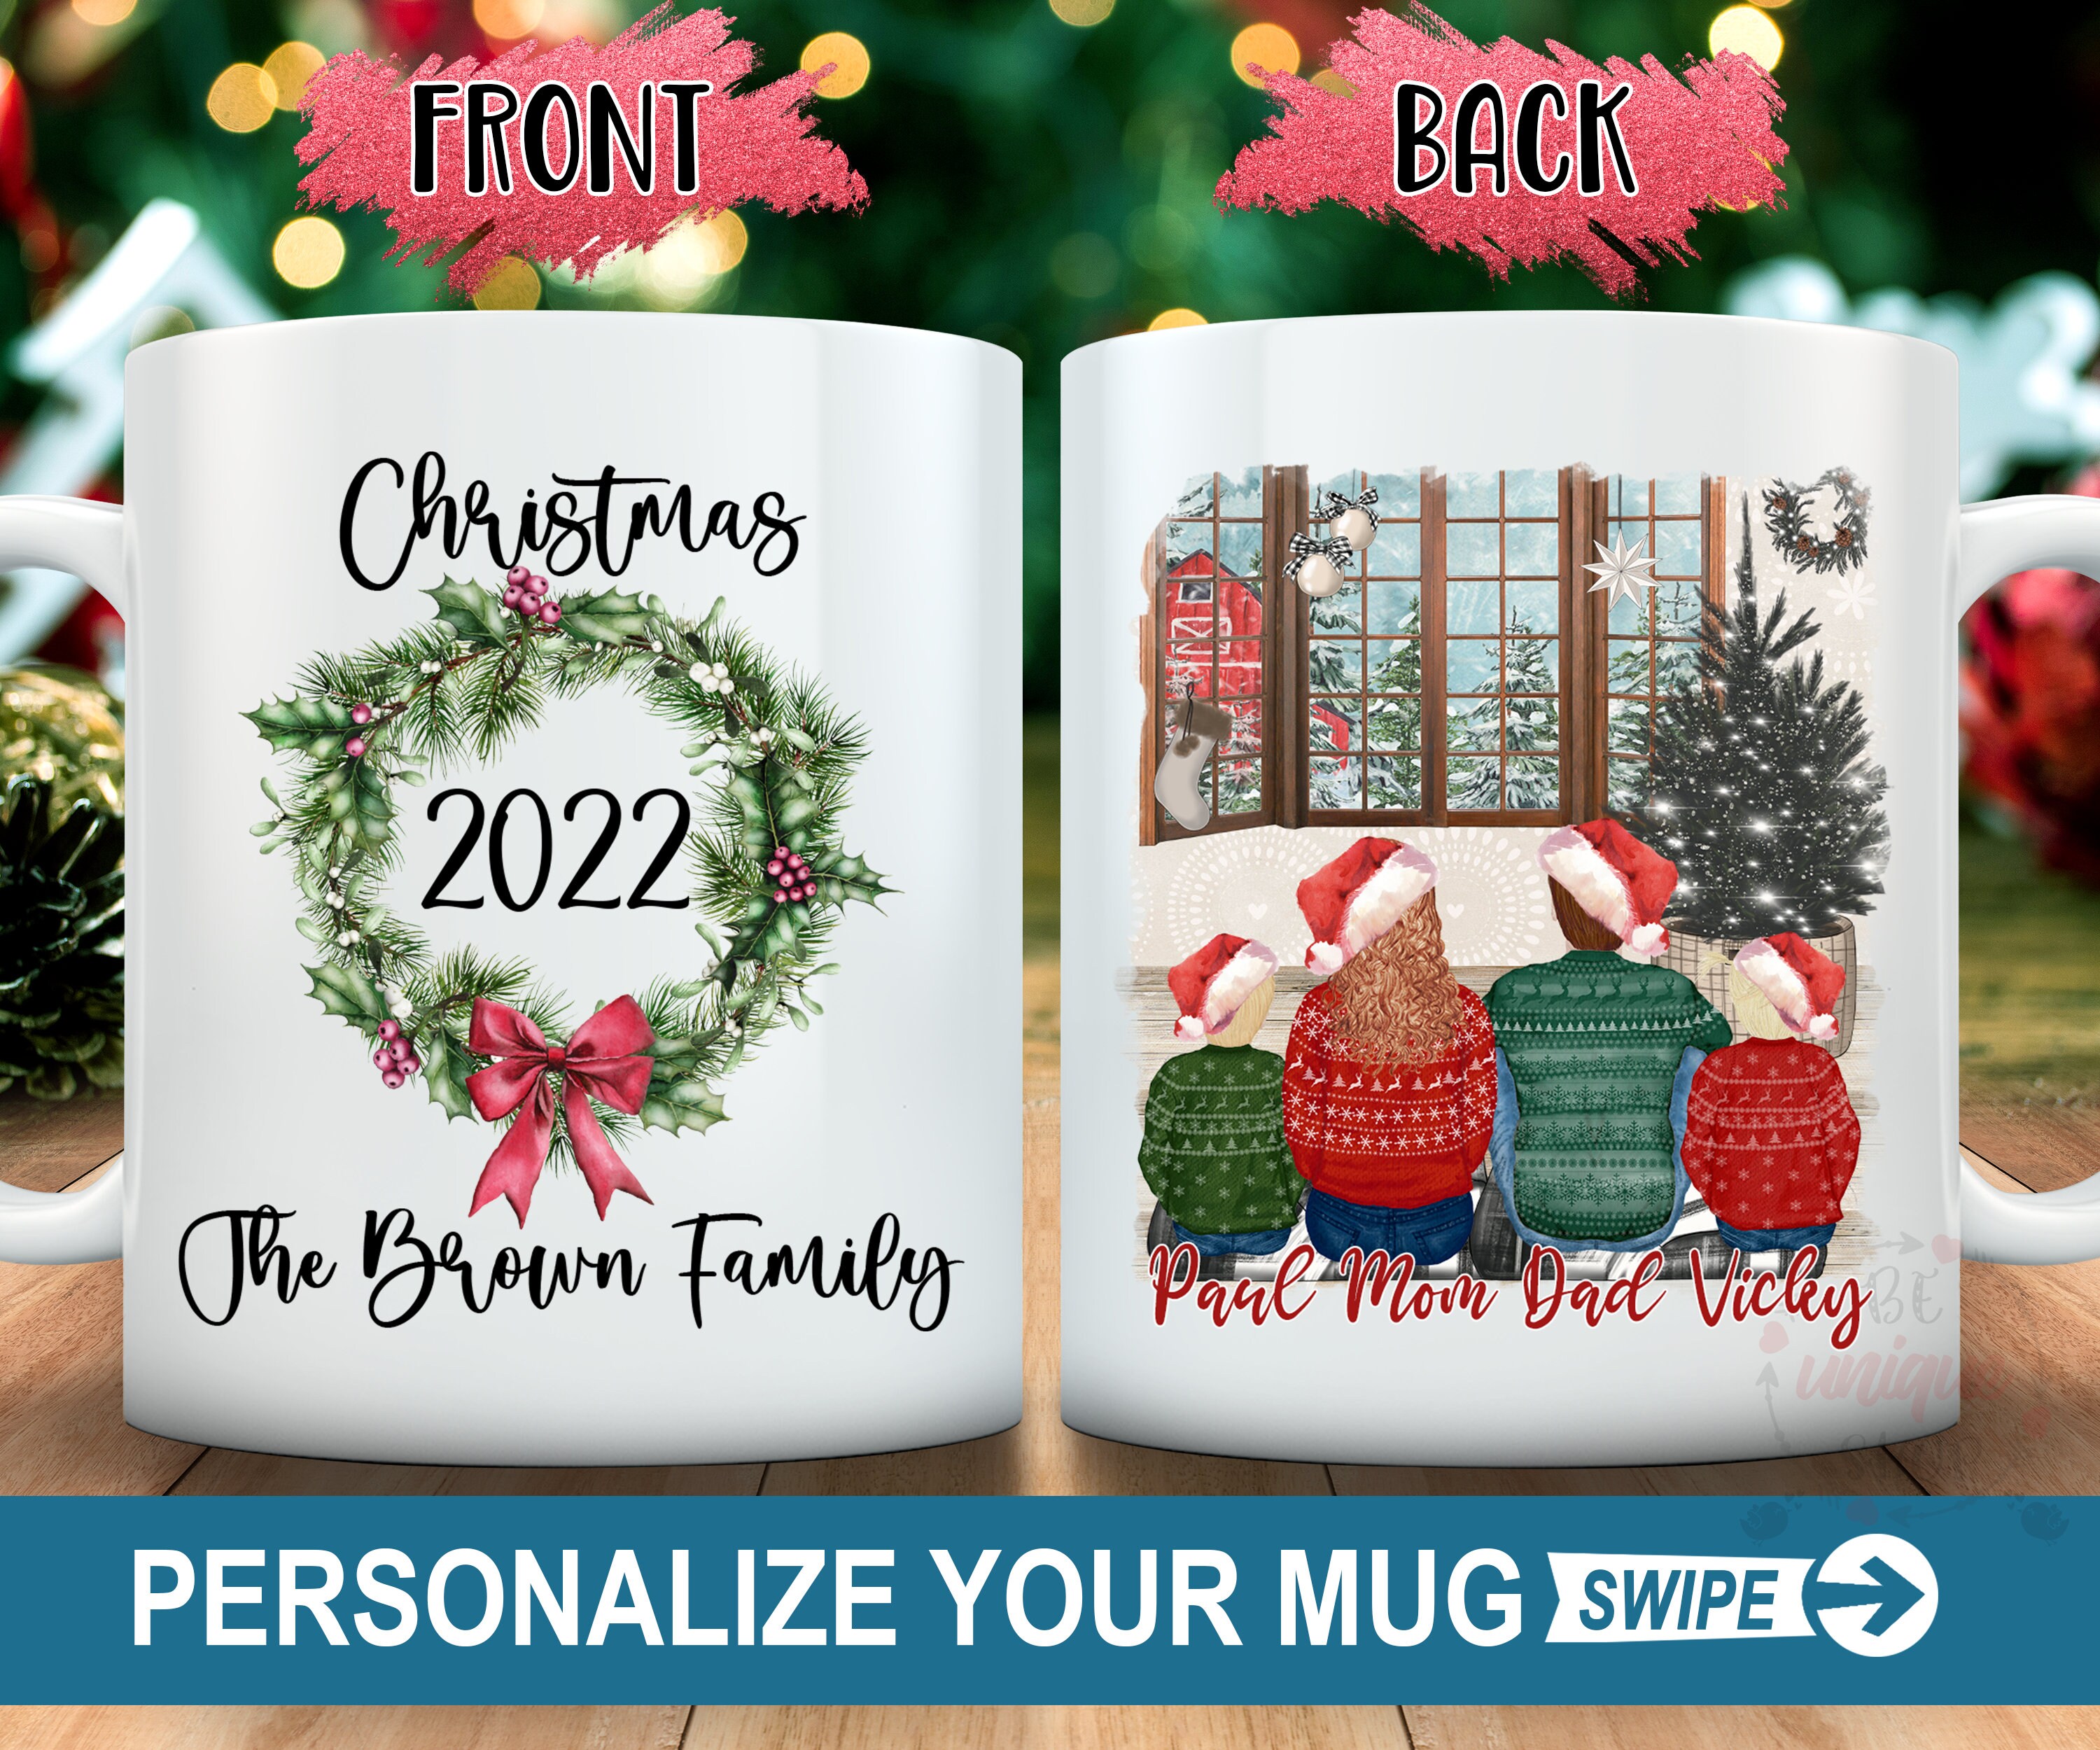 Personalized Christmas Family Mug